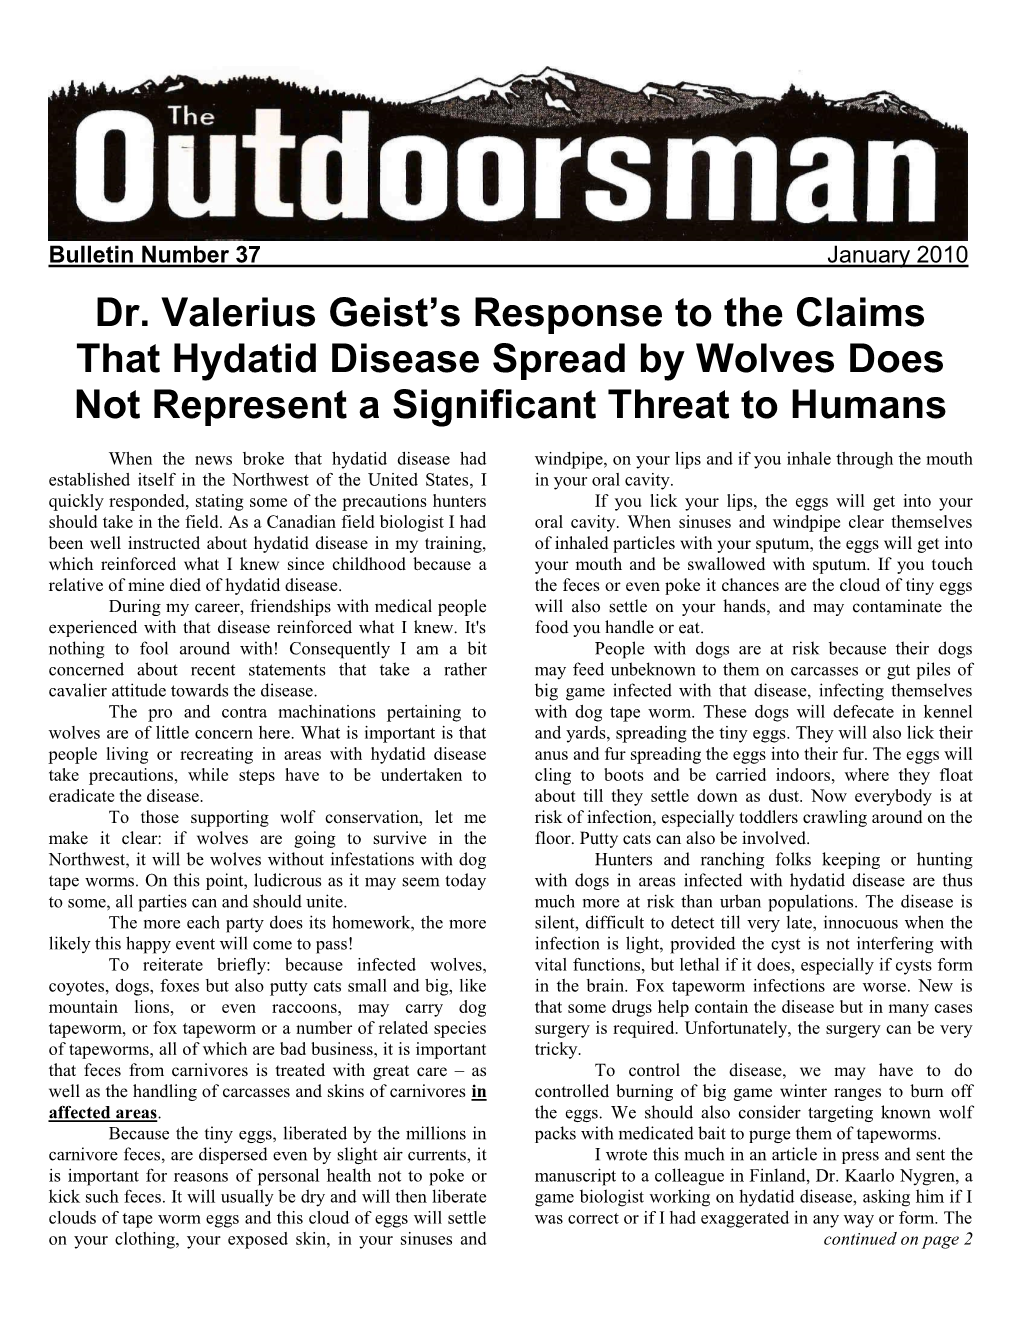 No. 37 Jan 2010-Dr. Valerius Geist's Response on Dangers to Humans on Hydatid Diseases